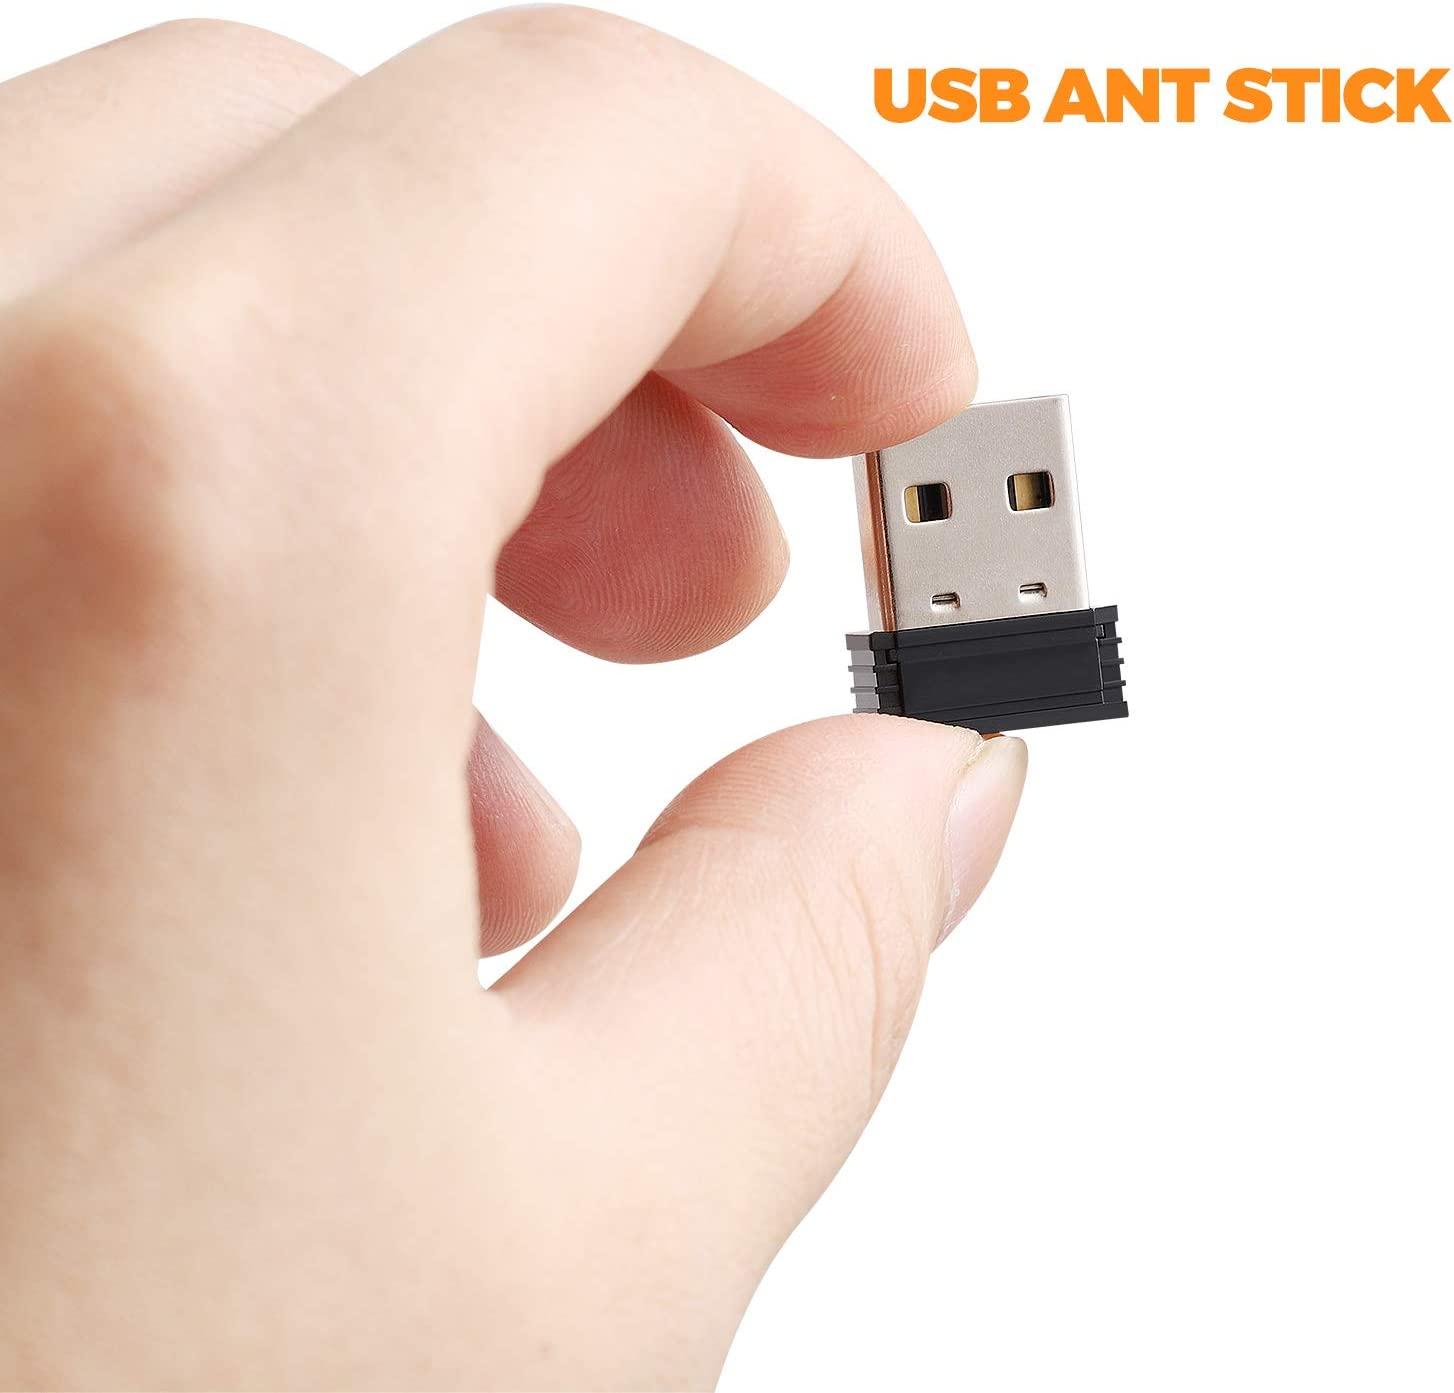 Ant Stick, Ant USB Stick